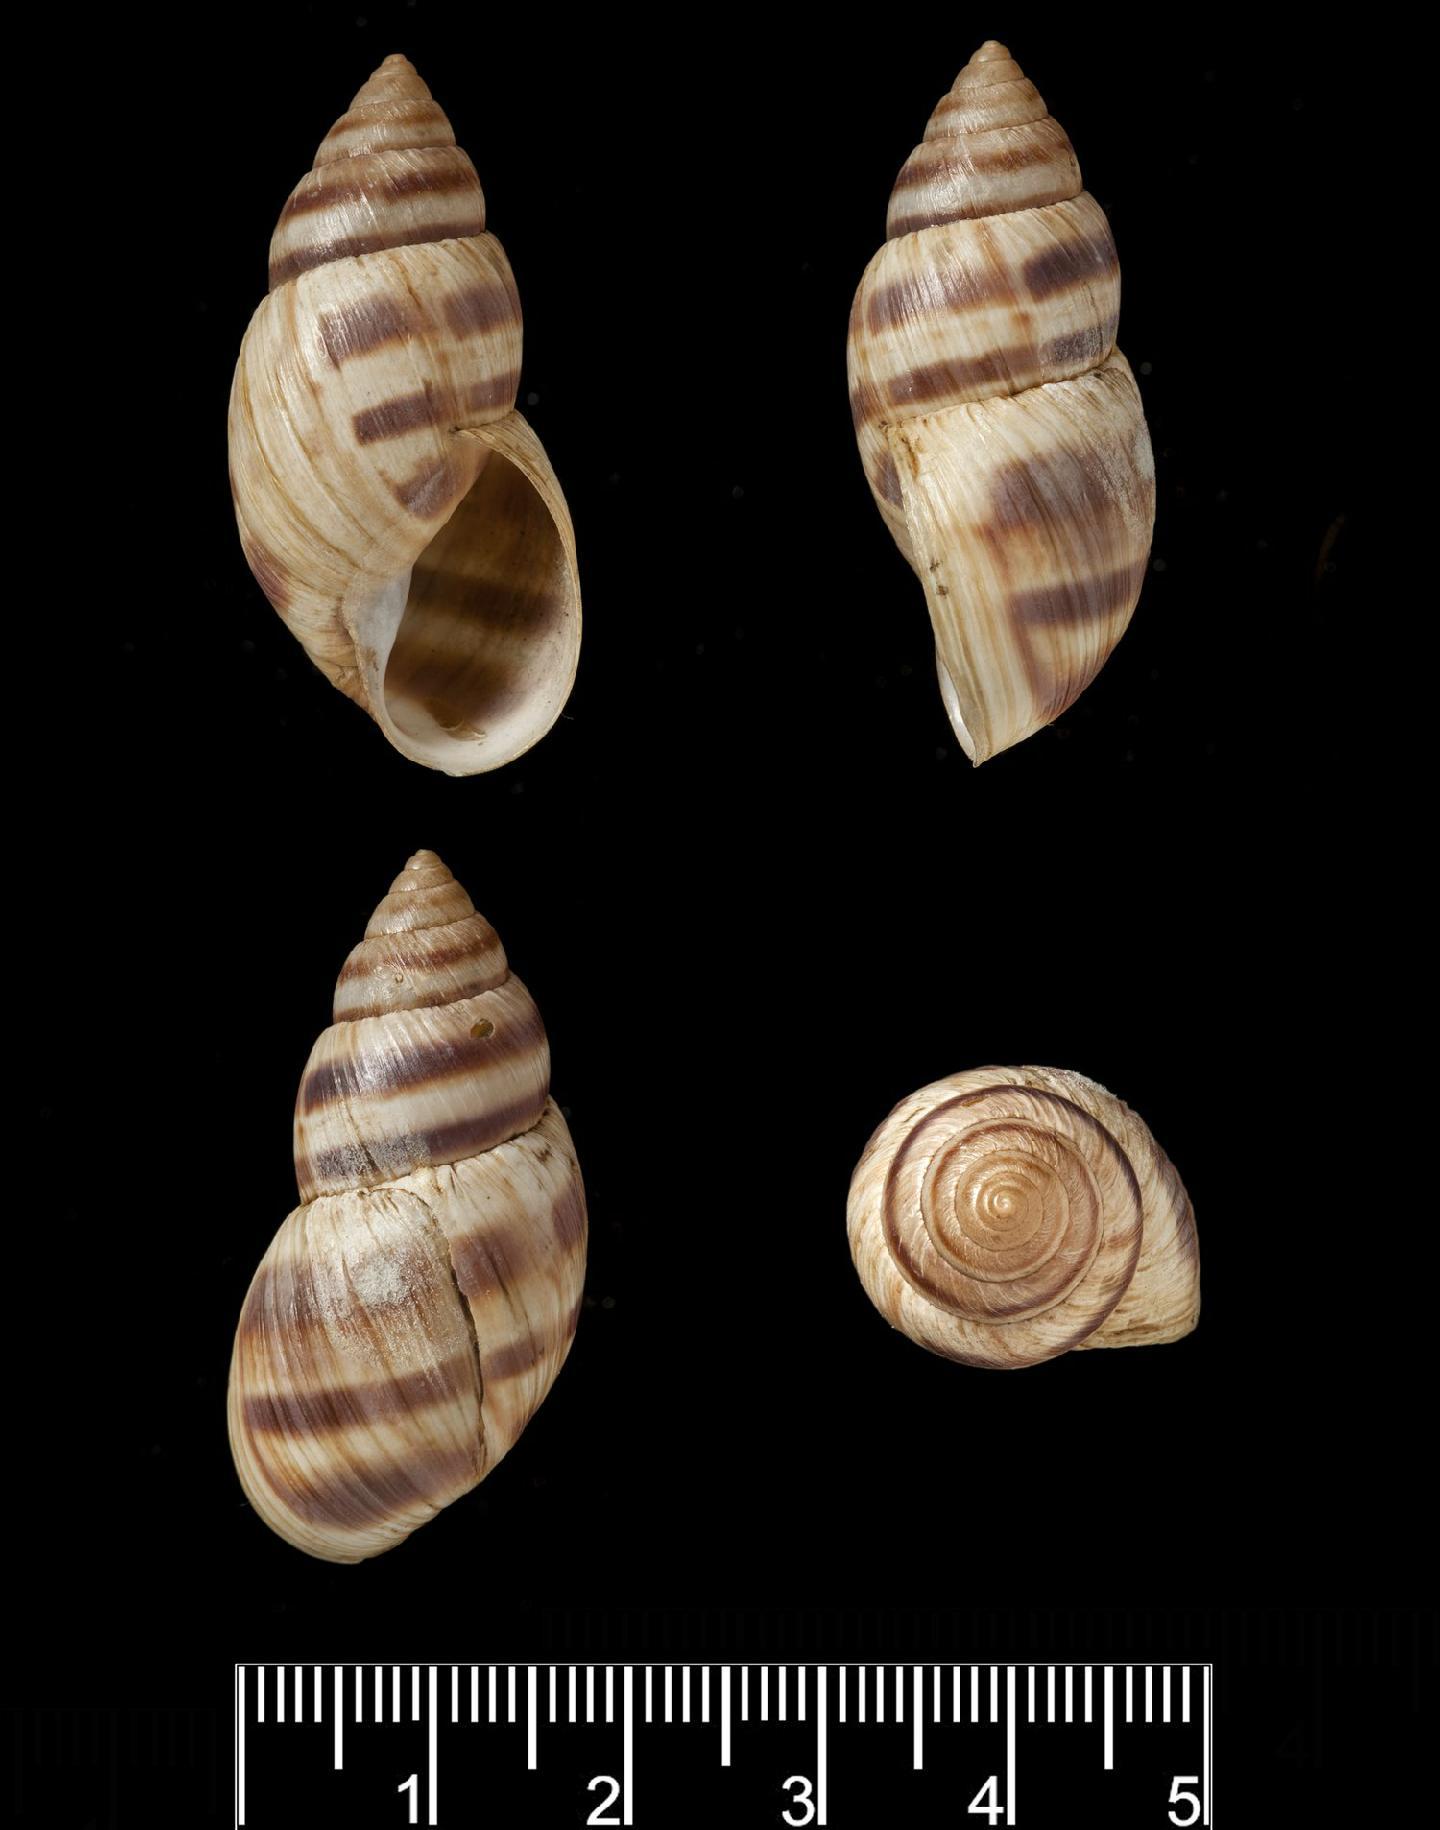 To NHMUK collection (Bulimus aequatorius Pfeiffer, 1853; LECTOTYPE; NHMUK:ecatalogue:3506857)